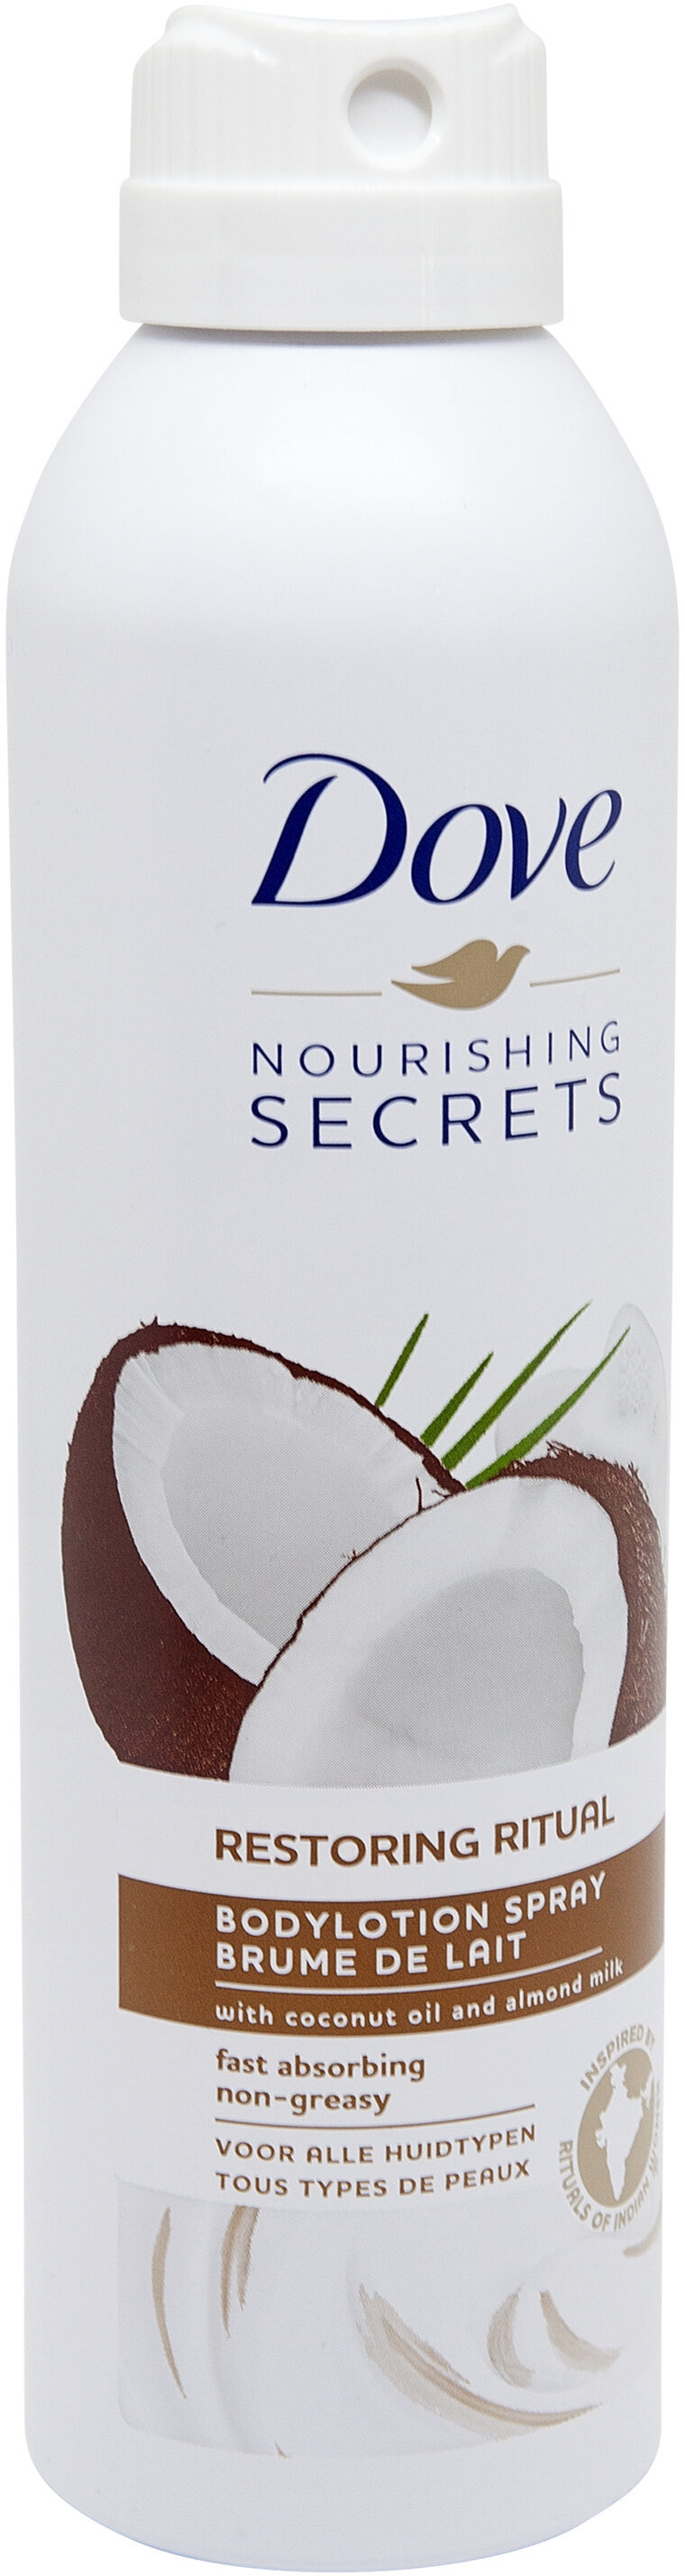 Dove Nourishing Secrets Spray Lait Corps Restoring Coco - Product - fr